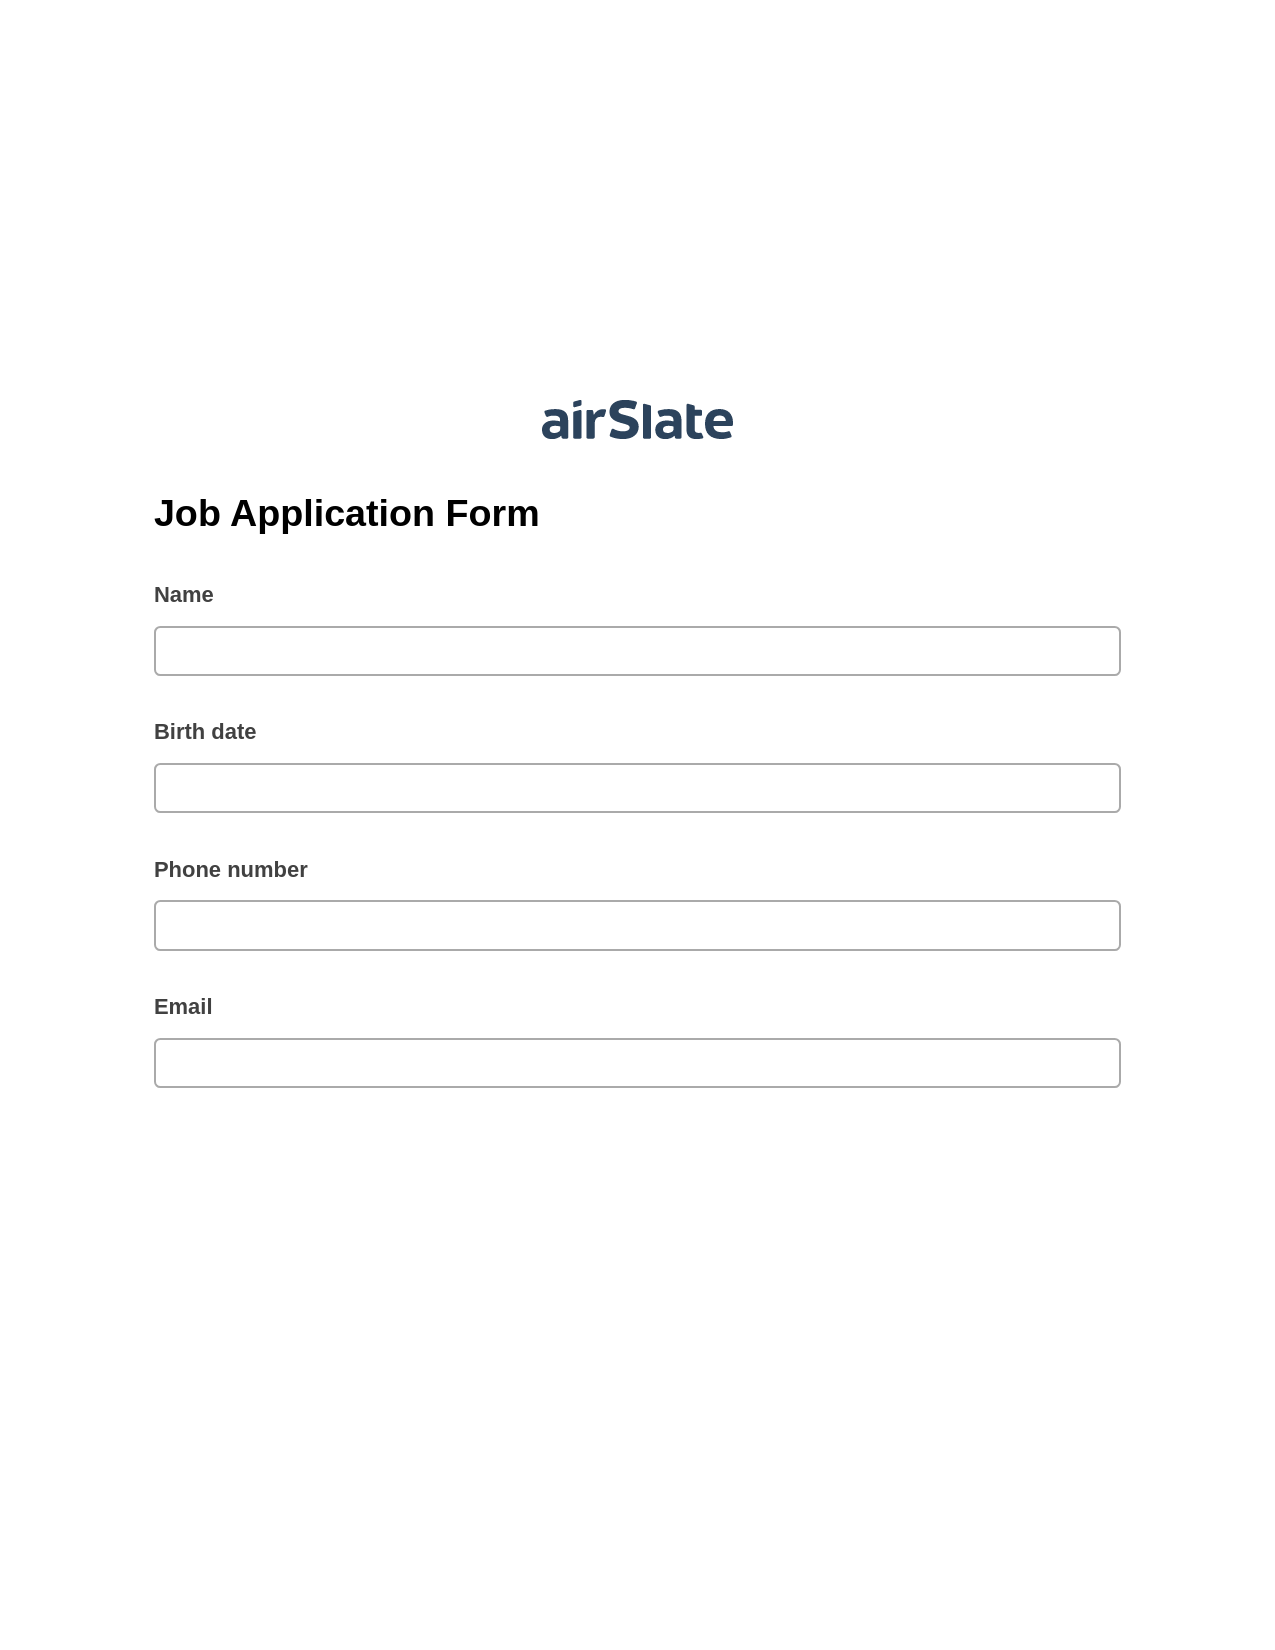 Multirole Job Application Form Pre-fill from MySQL Dropdown Options Bot, Create slate addon, Webhook Postfinish Bot